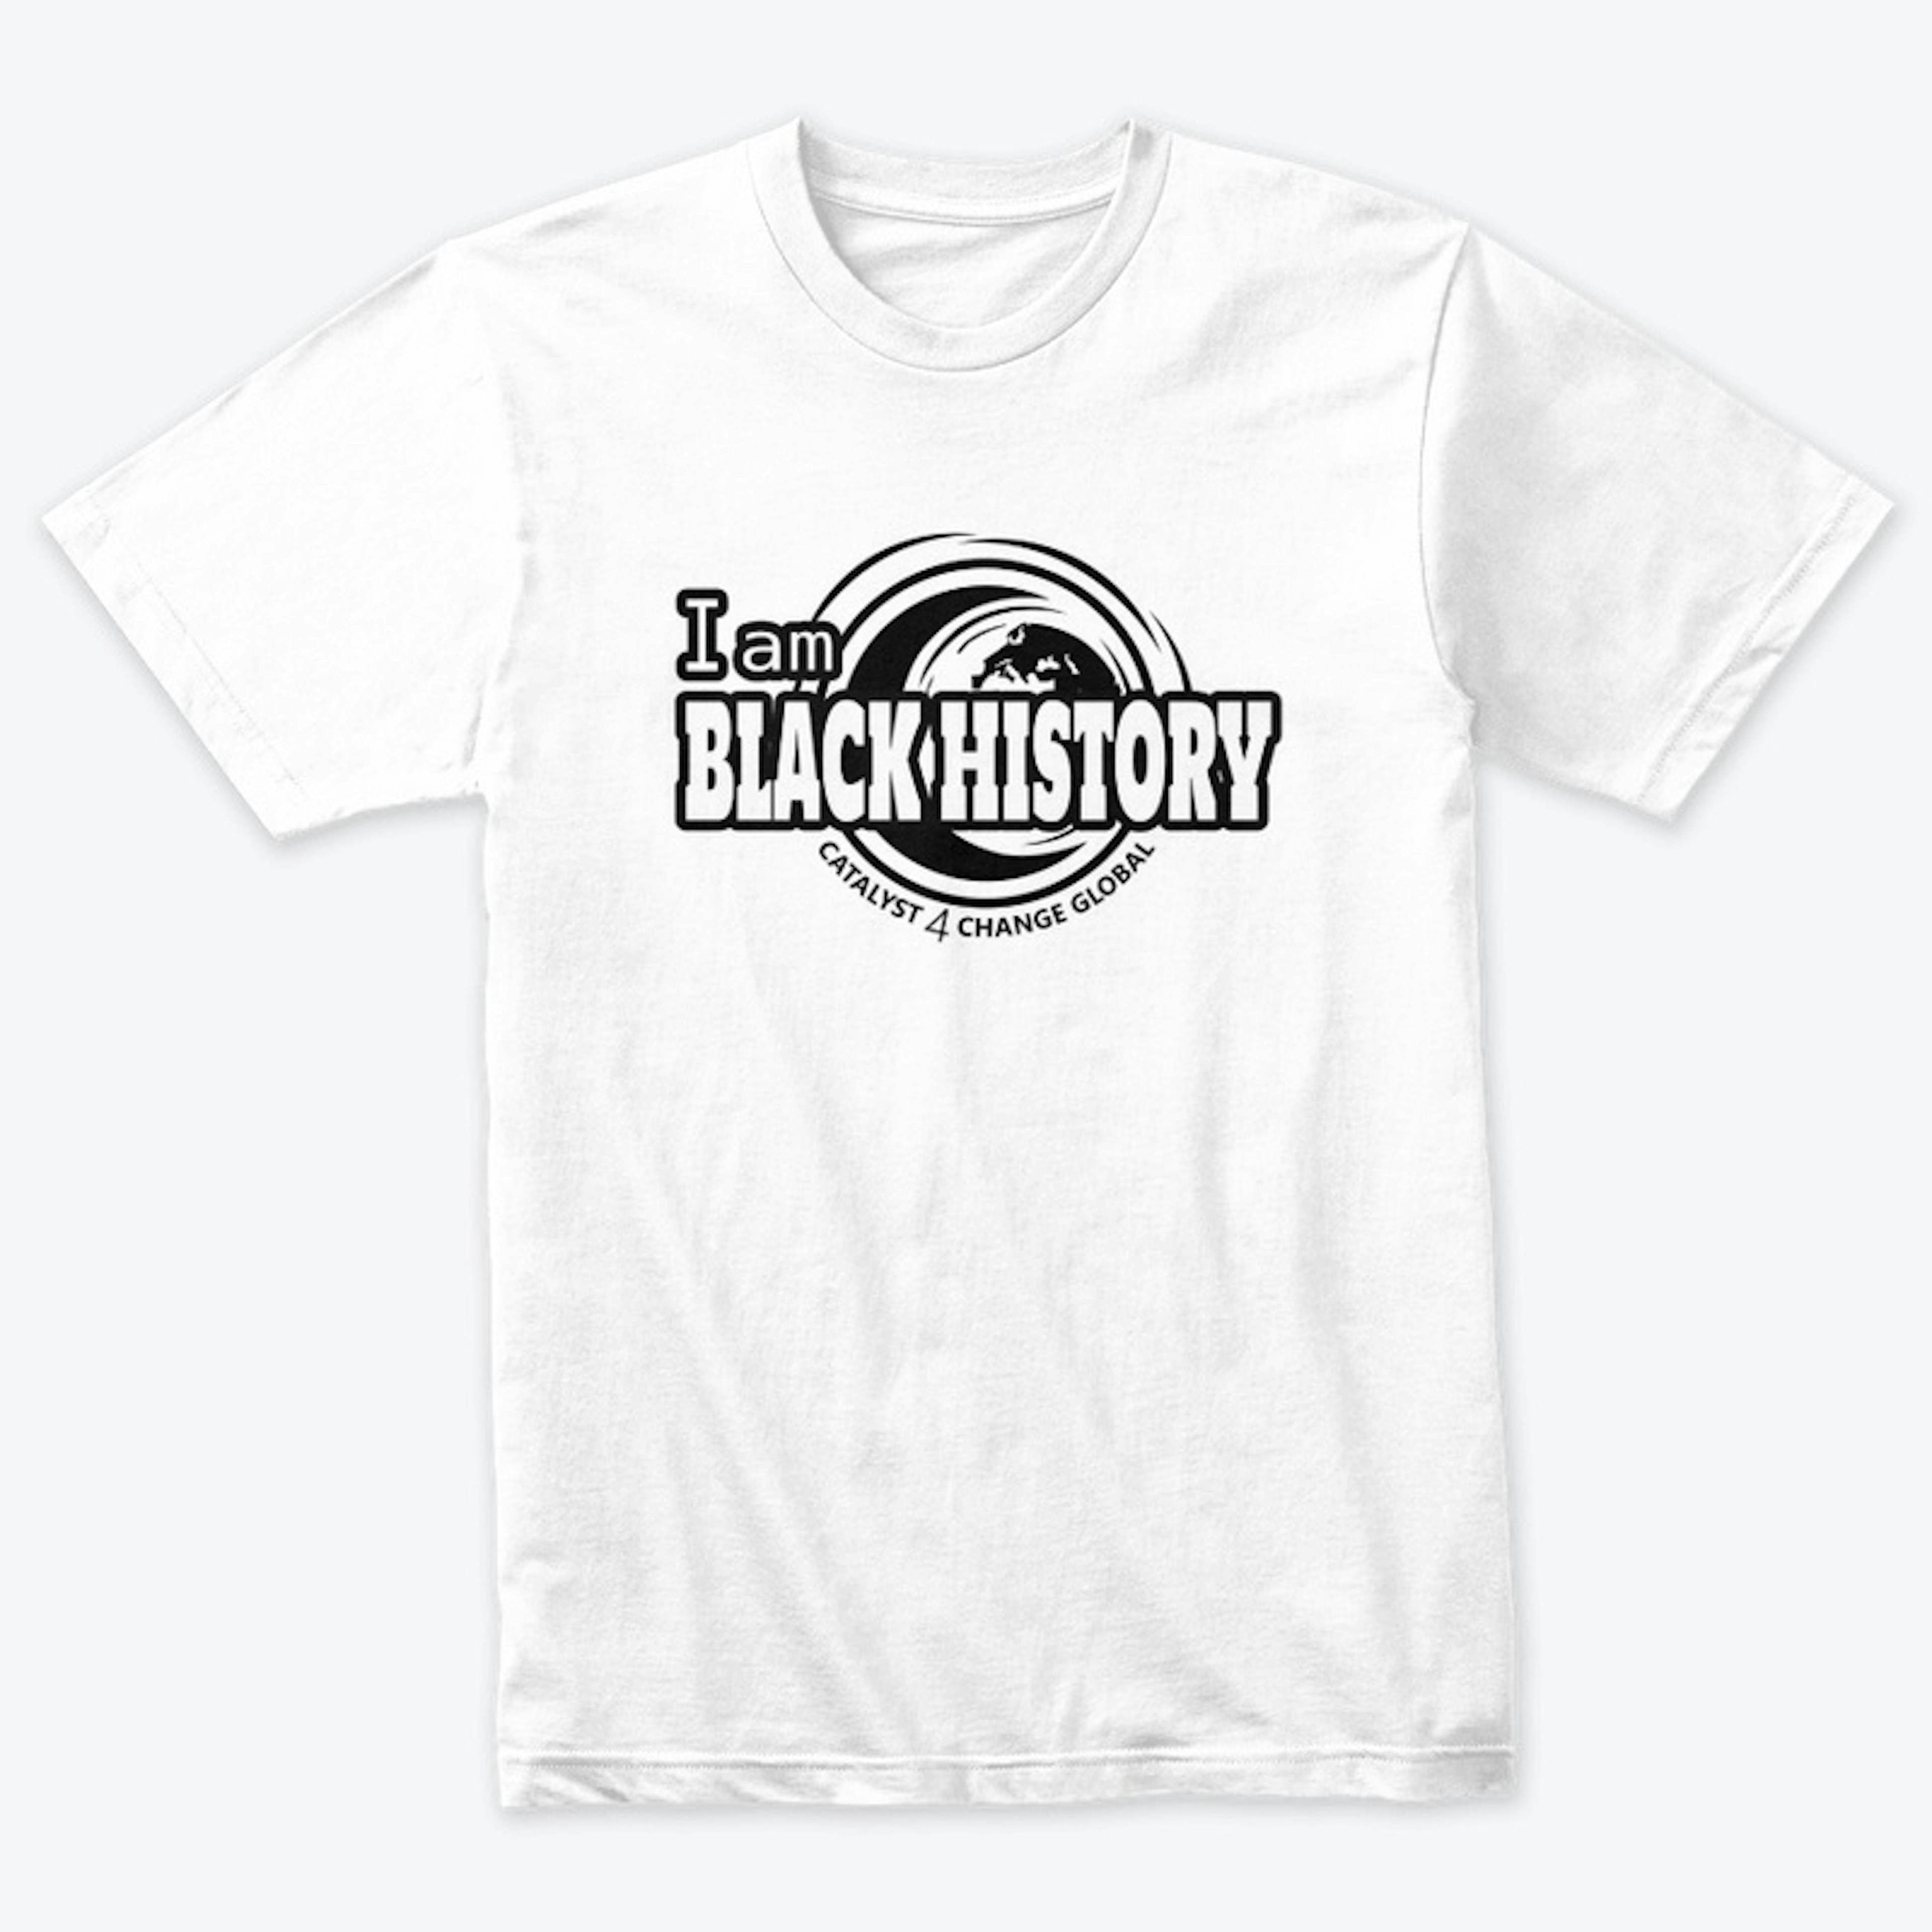 I am Black History - BW